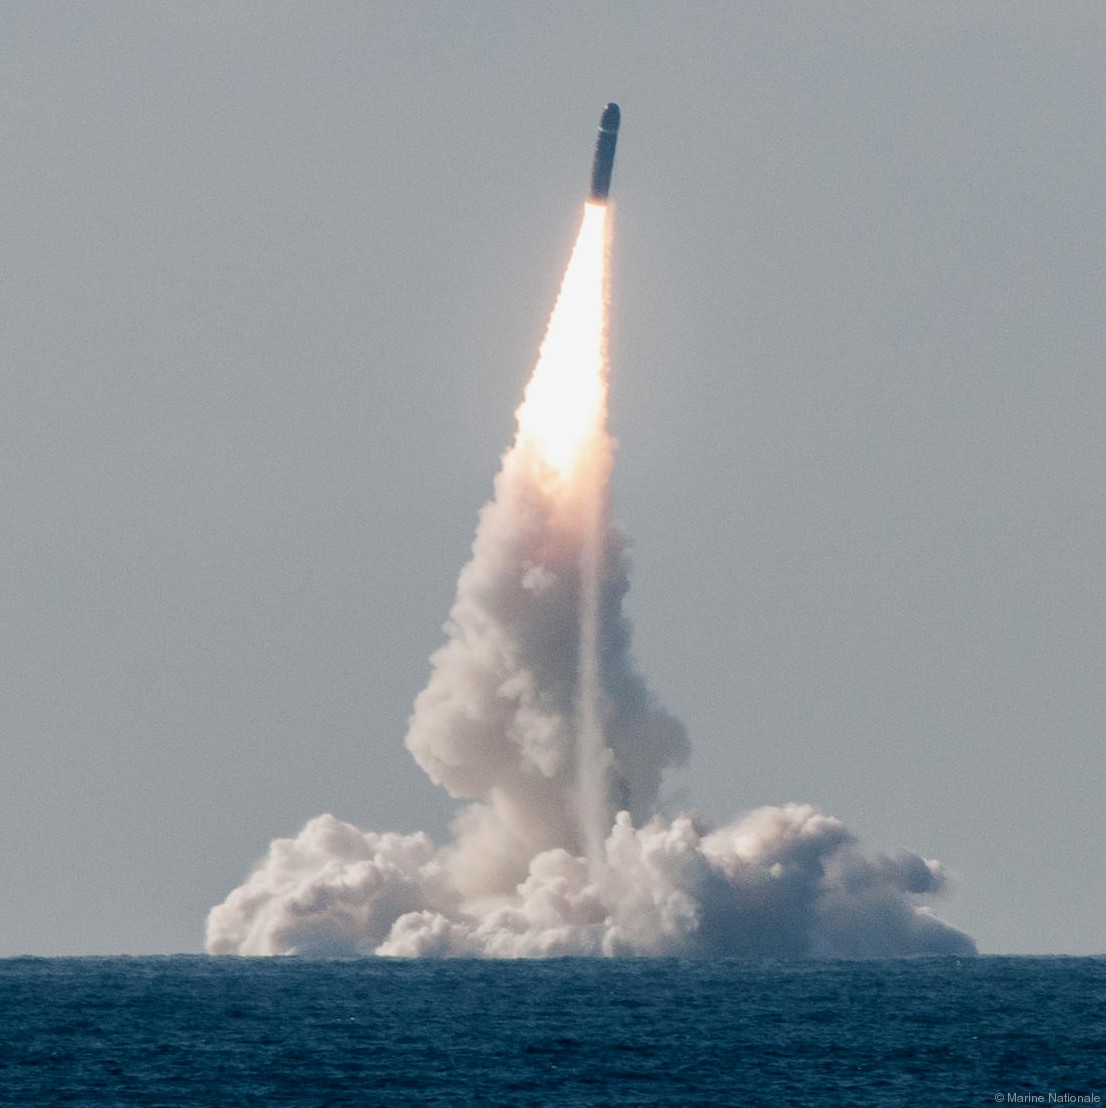 le triomphant class ballistic missile submarine ssbn snle french navy marine nationale s616 617 temeraire 618 vigilant 619 terrible 21 m45 m51 nuclear slbm mirv tn75 warhead